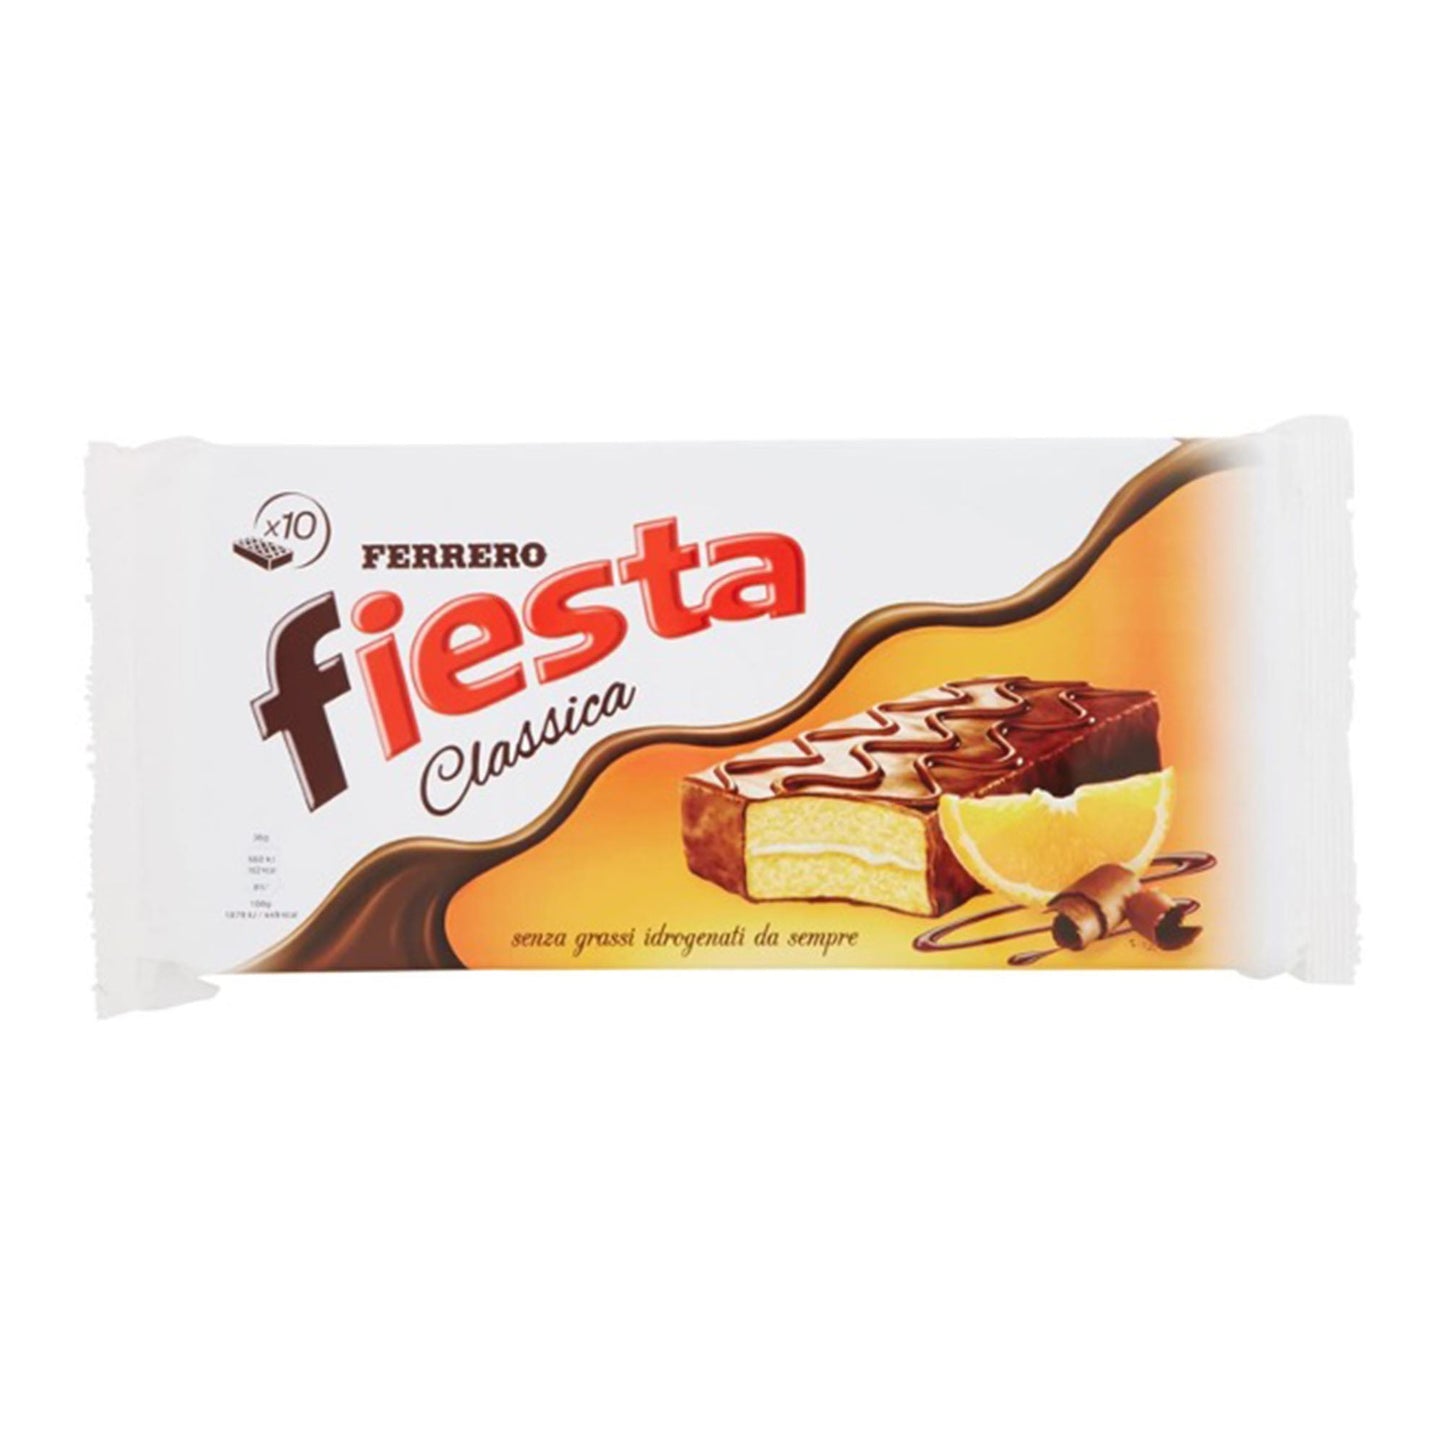 Ferrero Fiesta Classica 10Pc